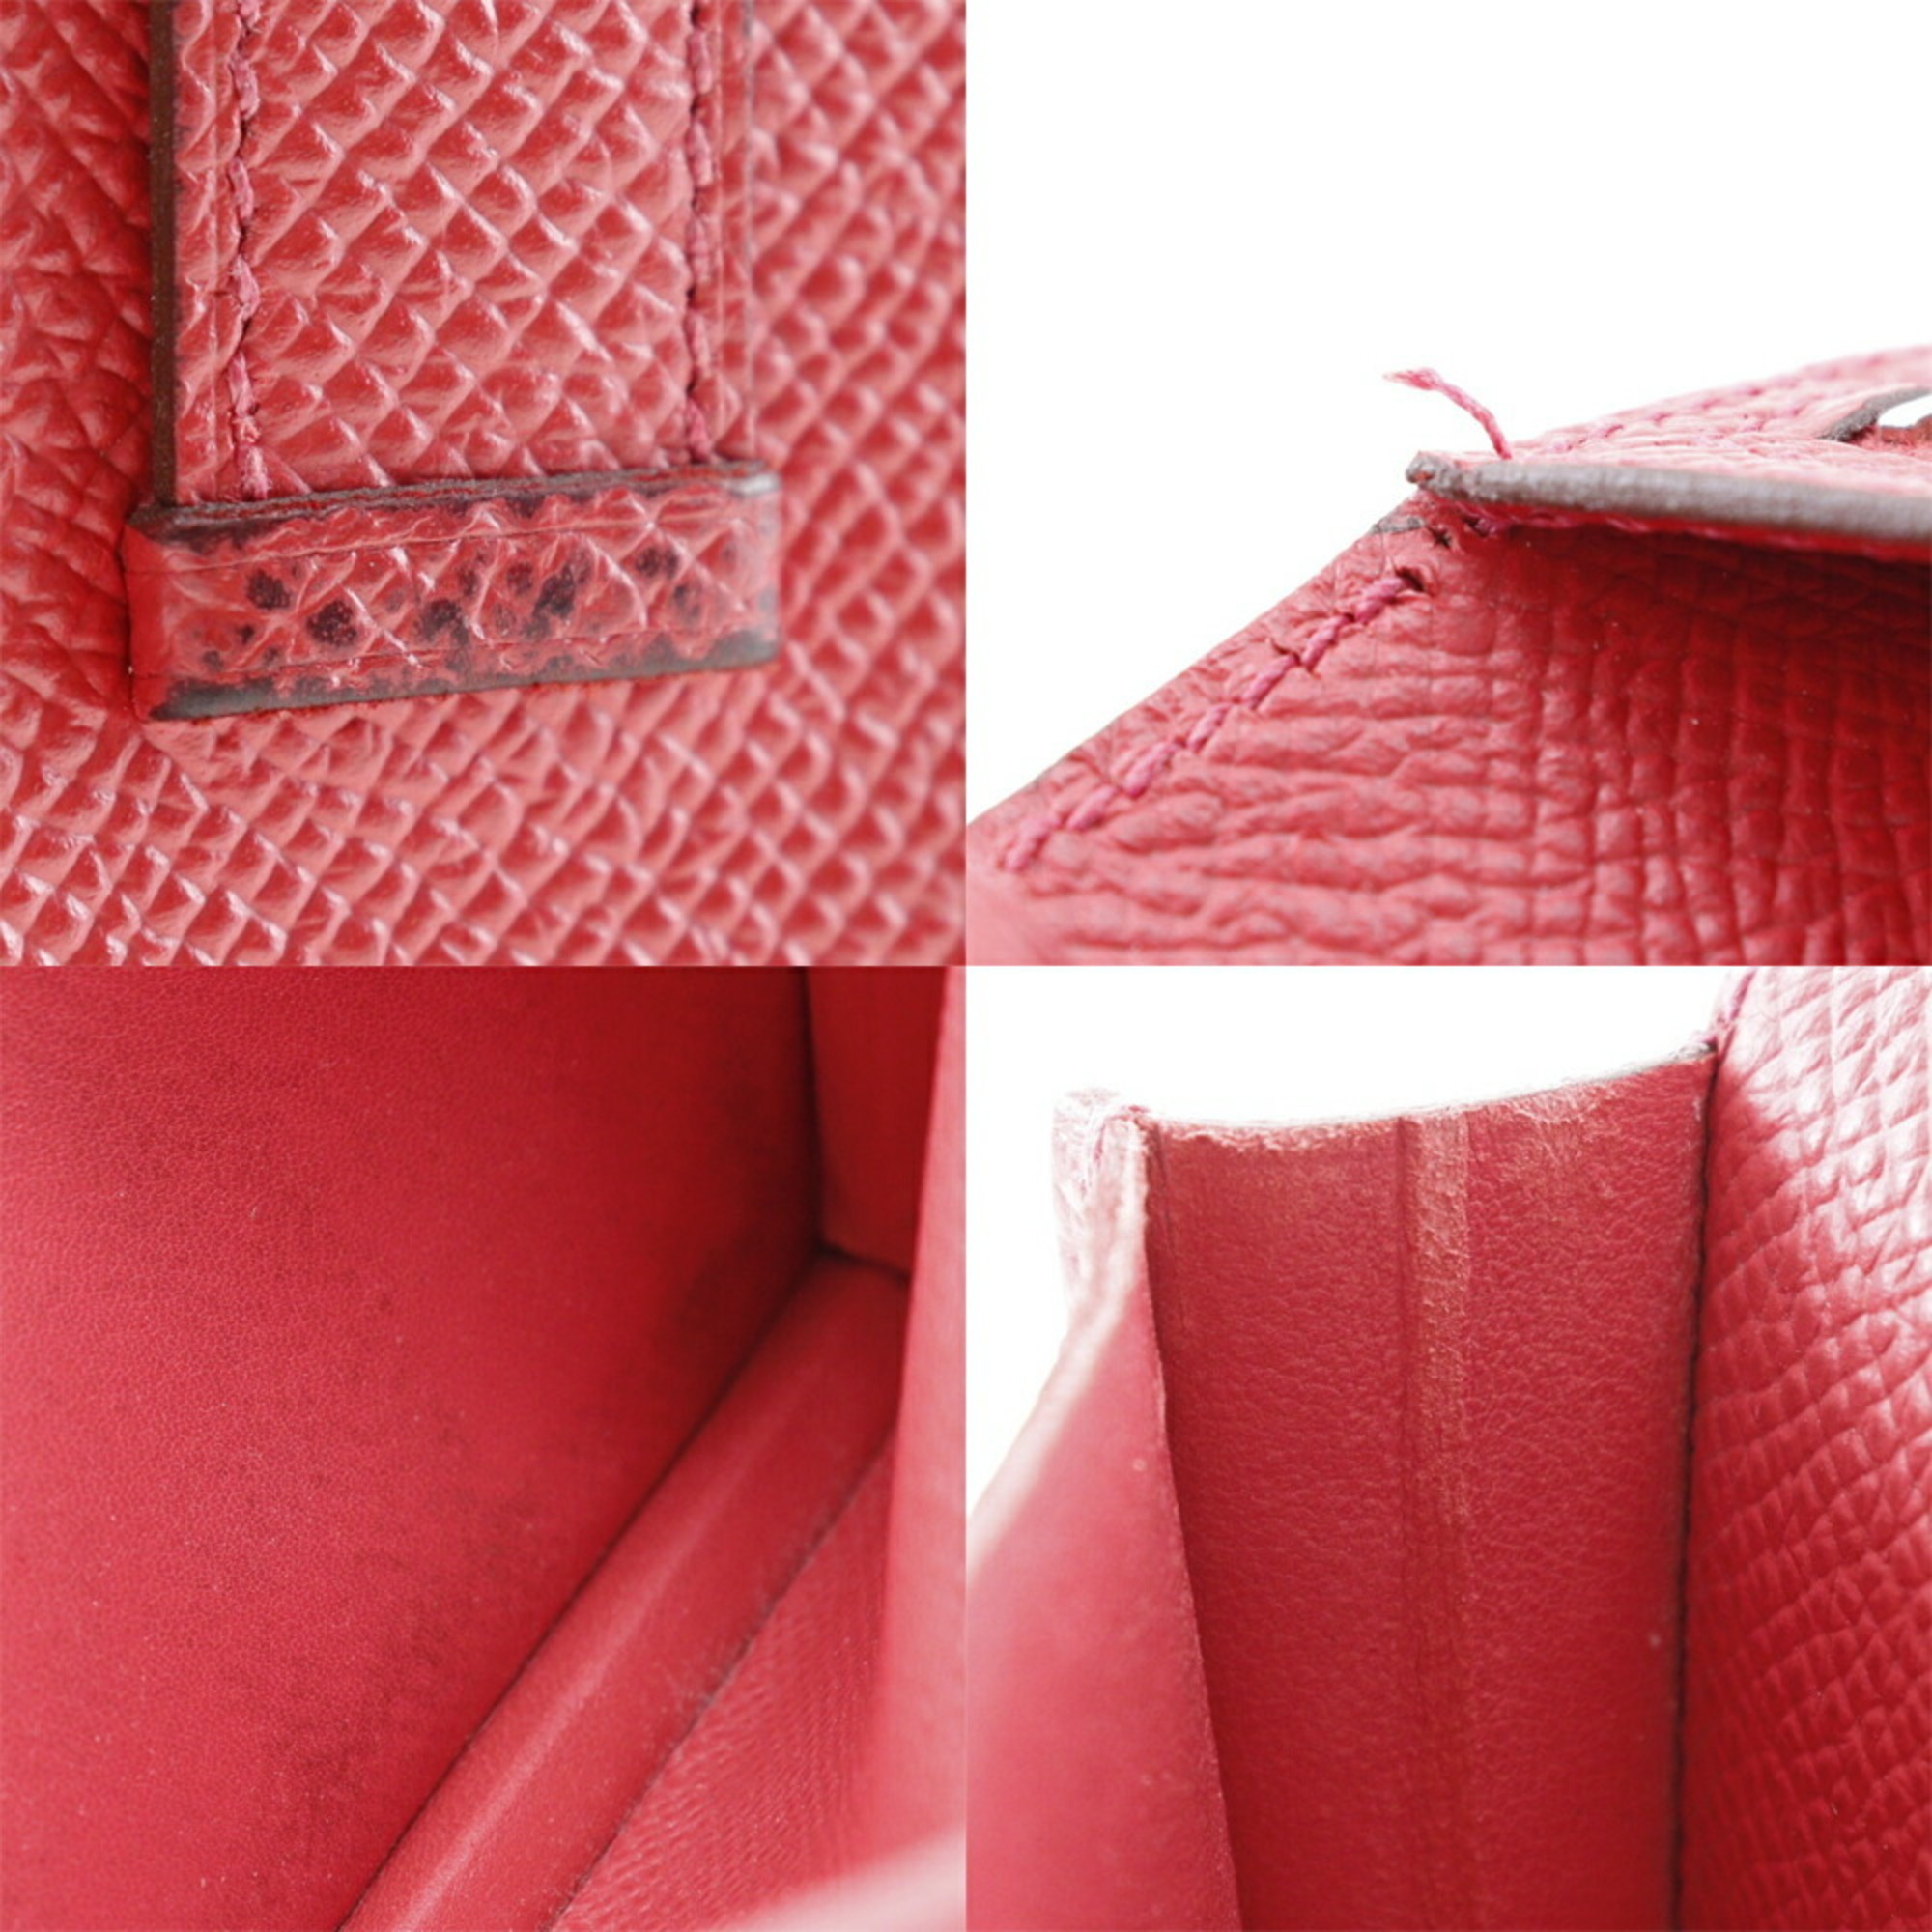 Hermes HERMES Beansufla Long Wallet Vaux Epson Made in France 2014 Red □R Belt Hardware Ladies